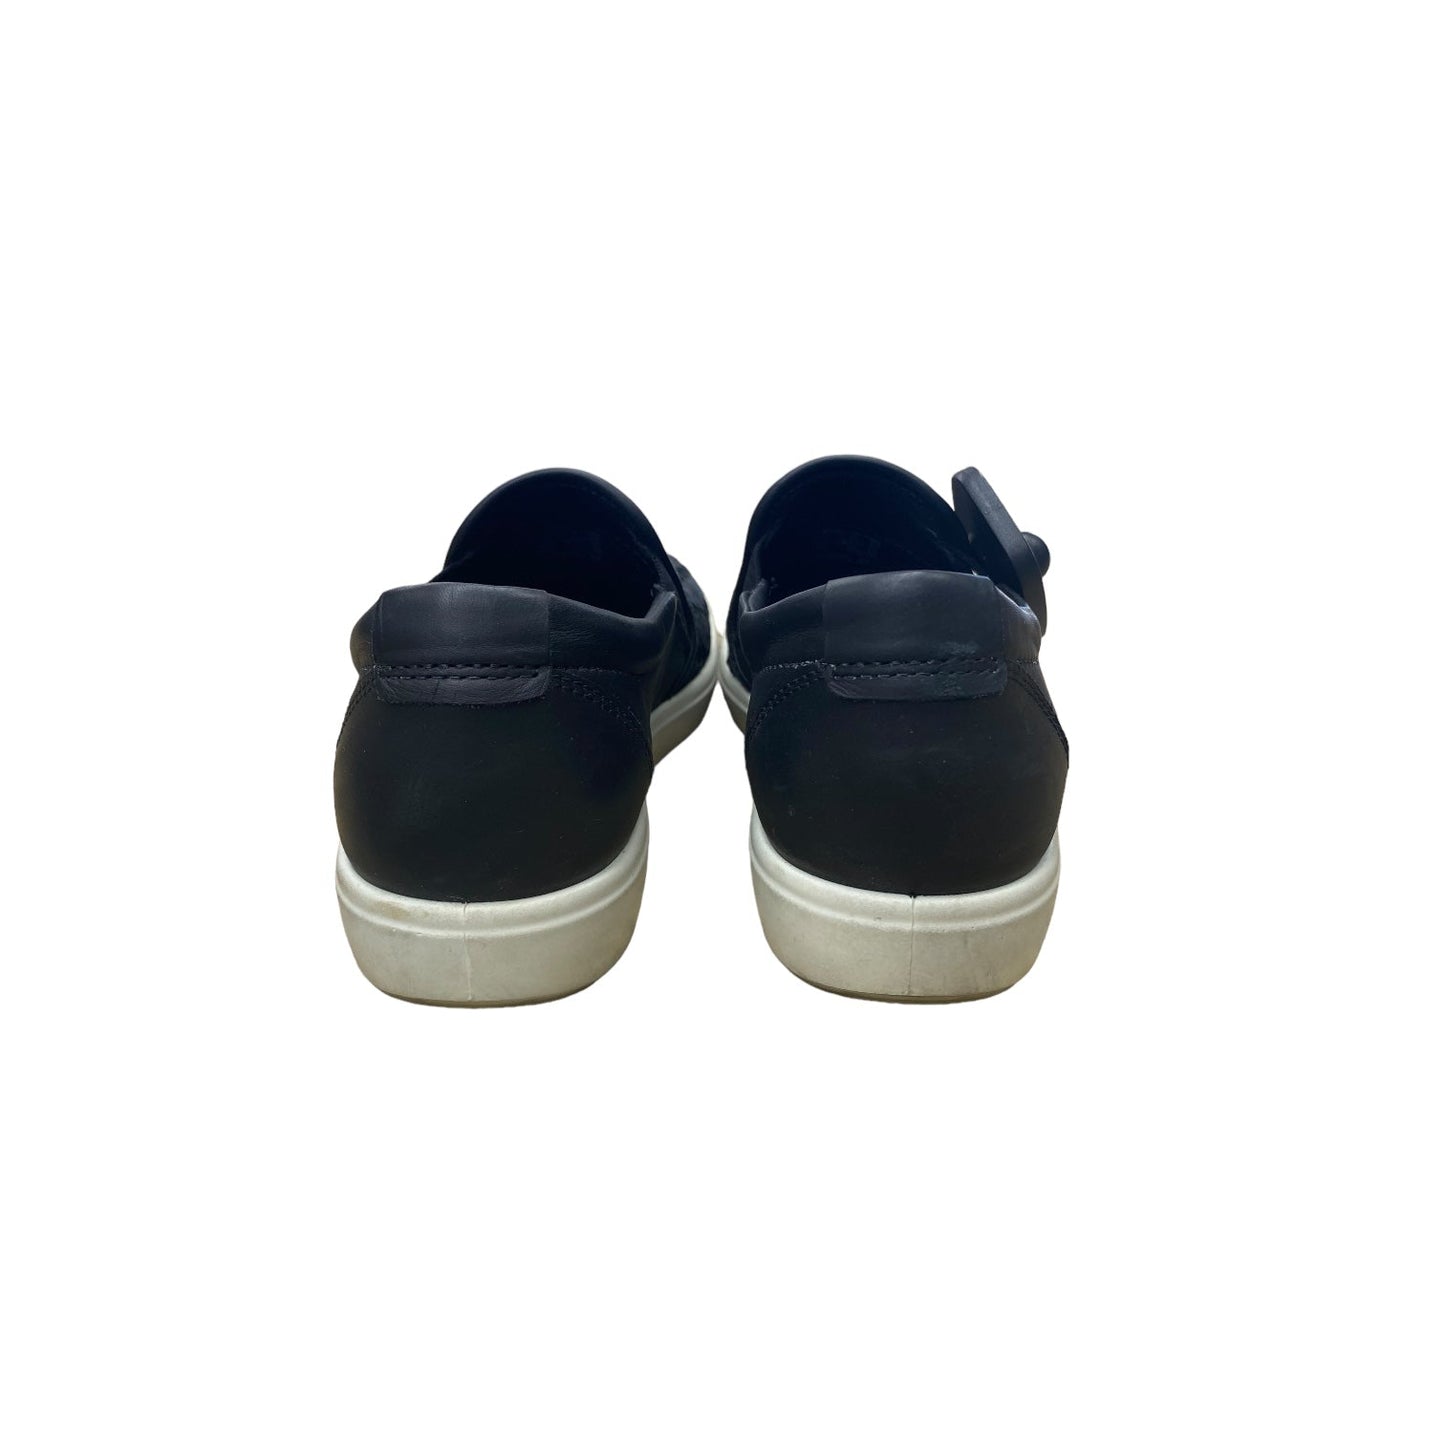 Black & White Shoes Flats Ecco, Size 6.5